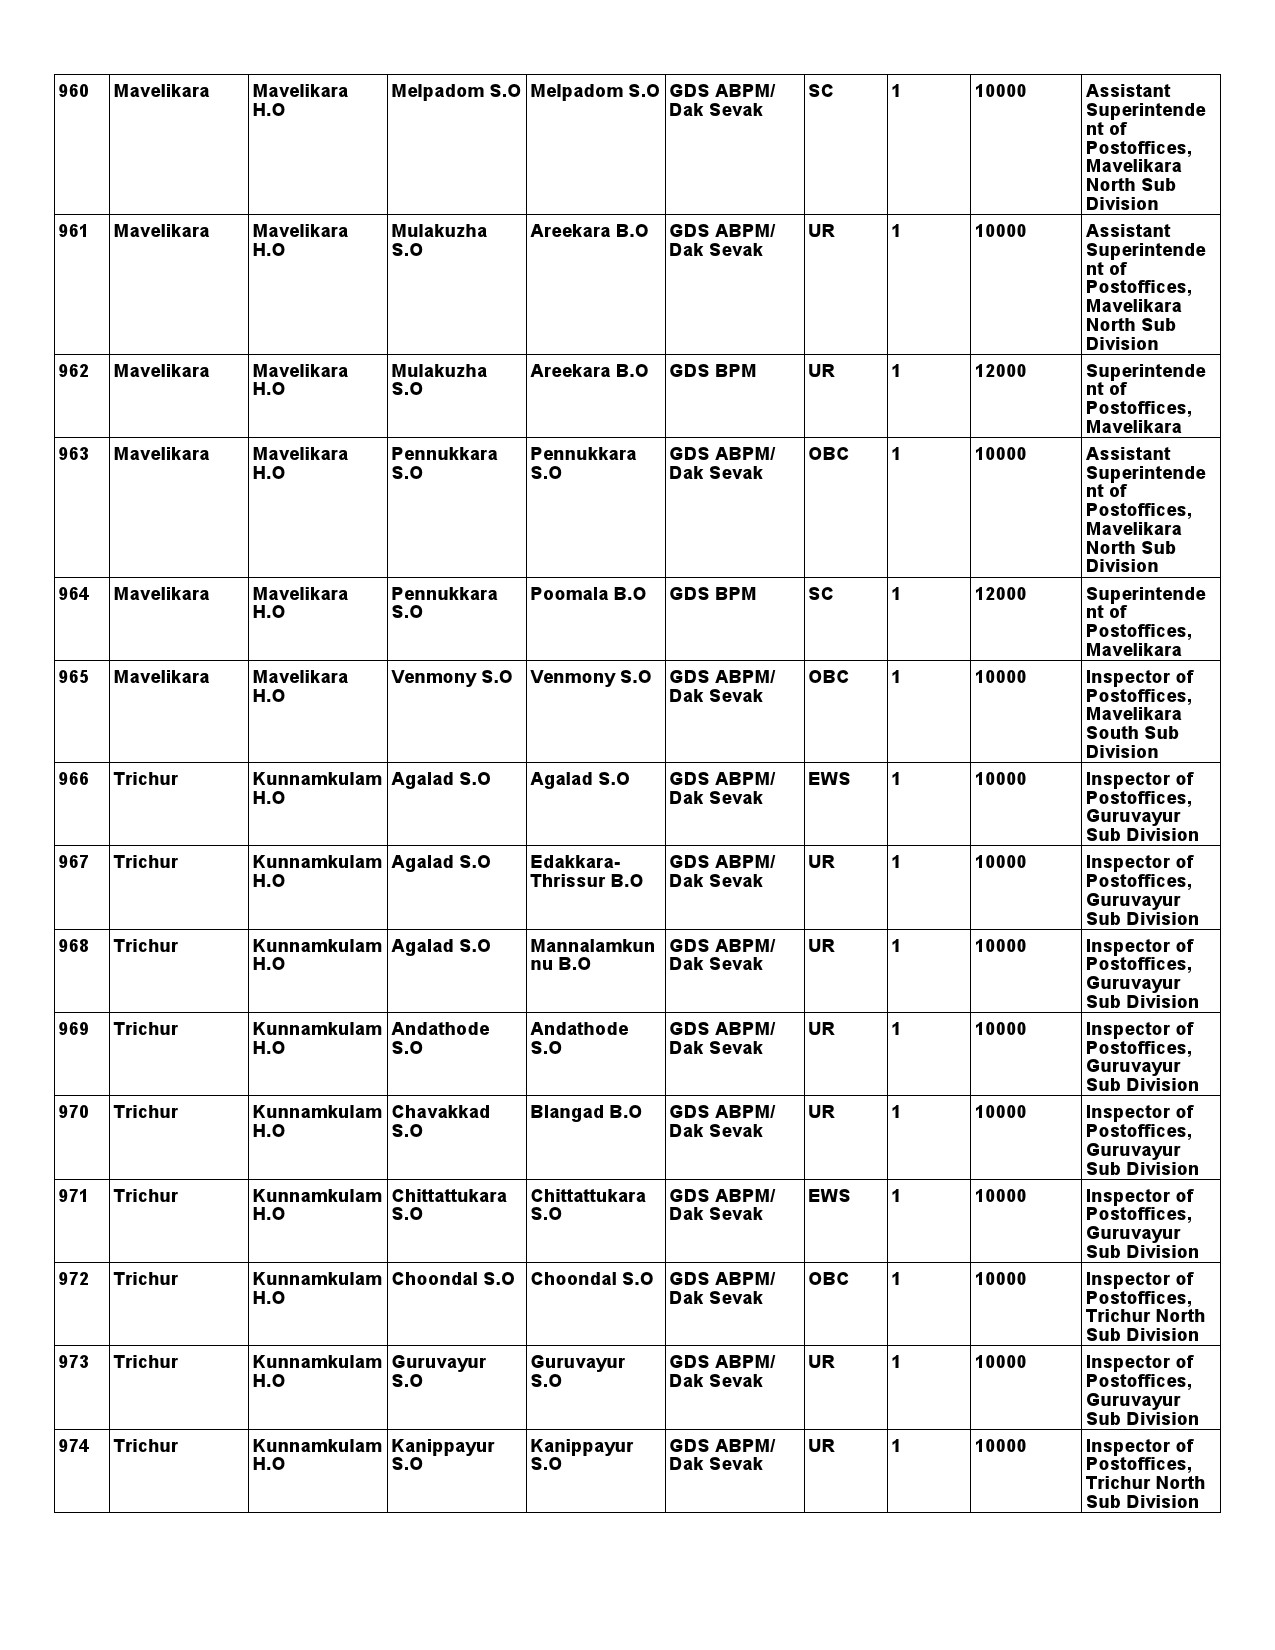 Kerala Postal Circle GDS Recruitment 2021 notification - Notification Image 82